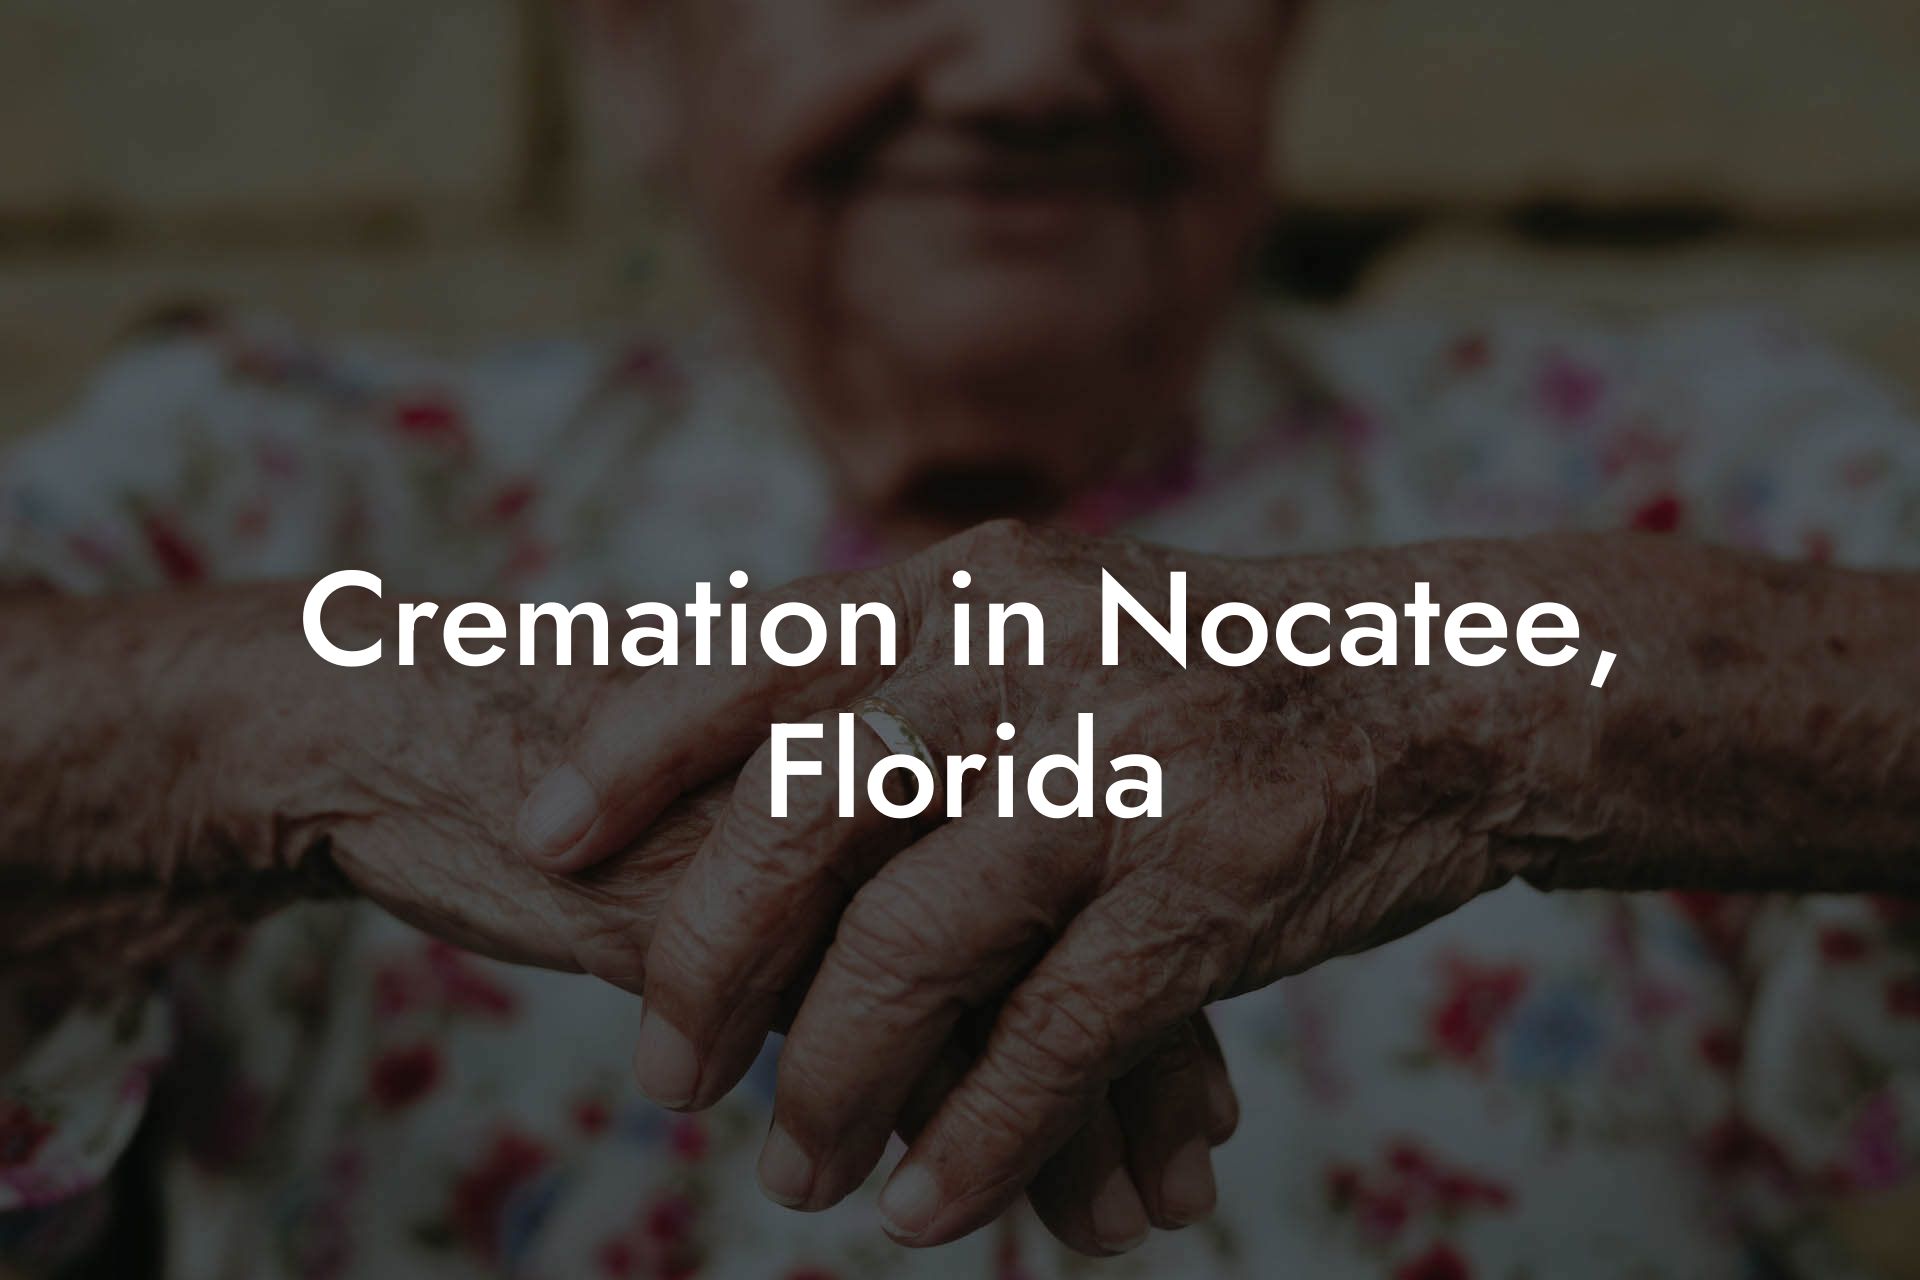 Cremation in Nocatee, Florida